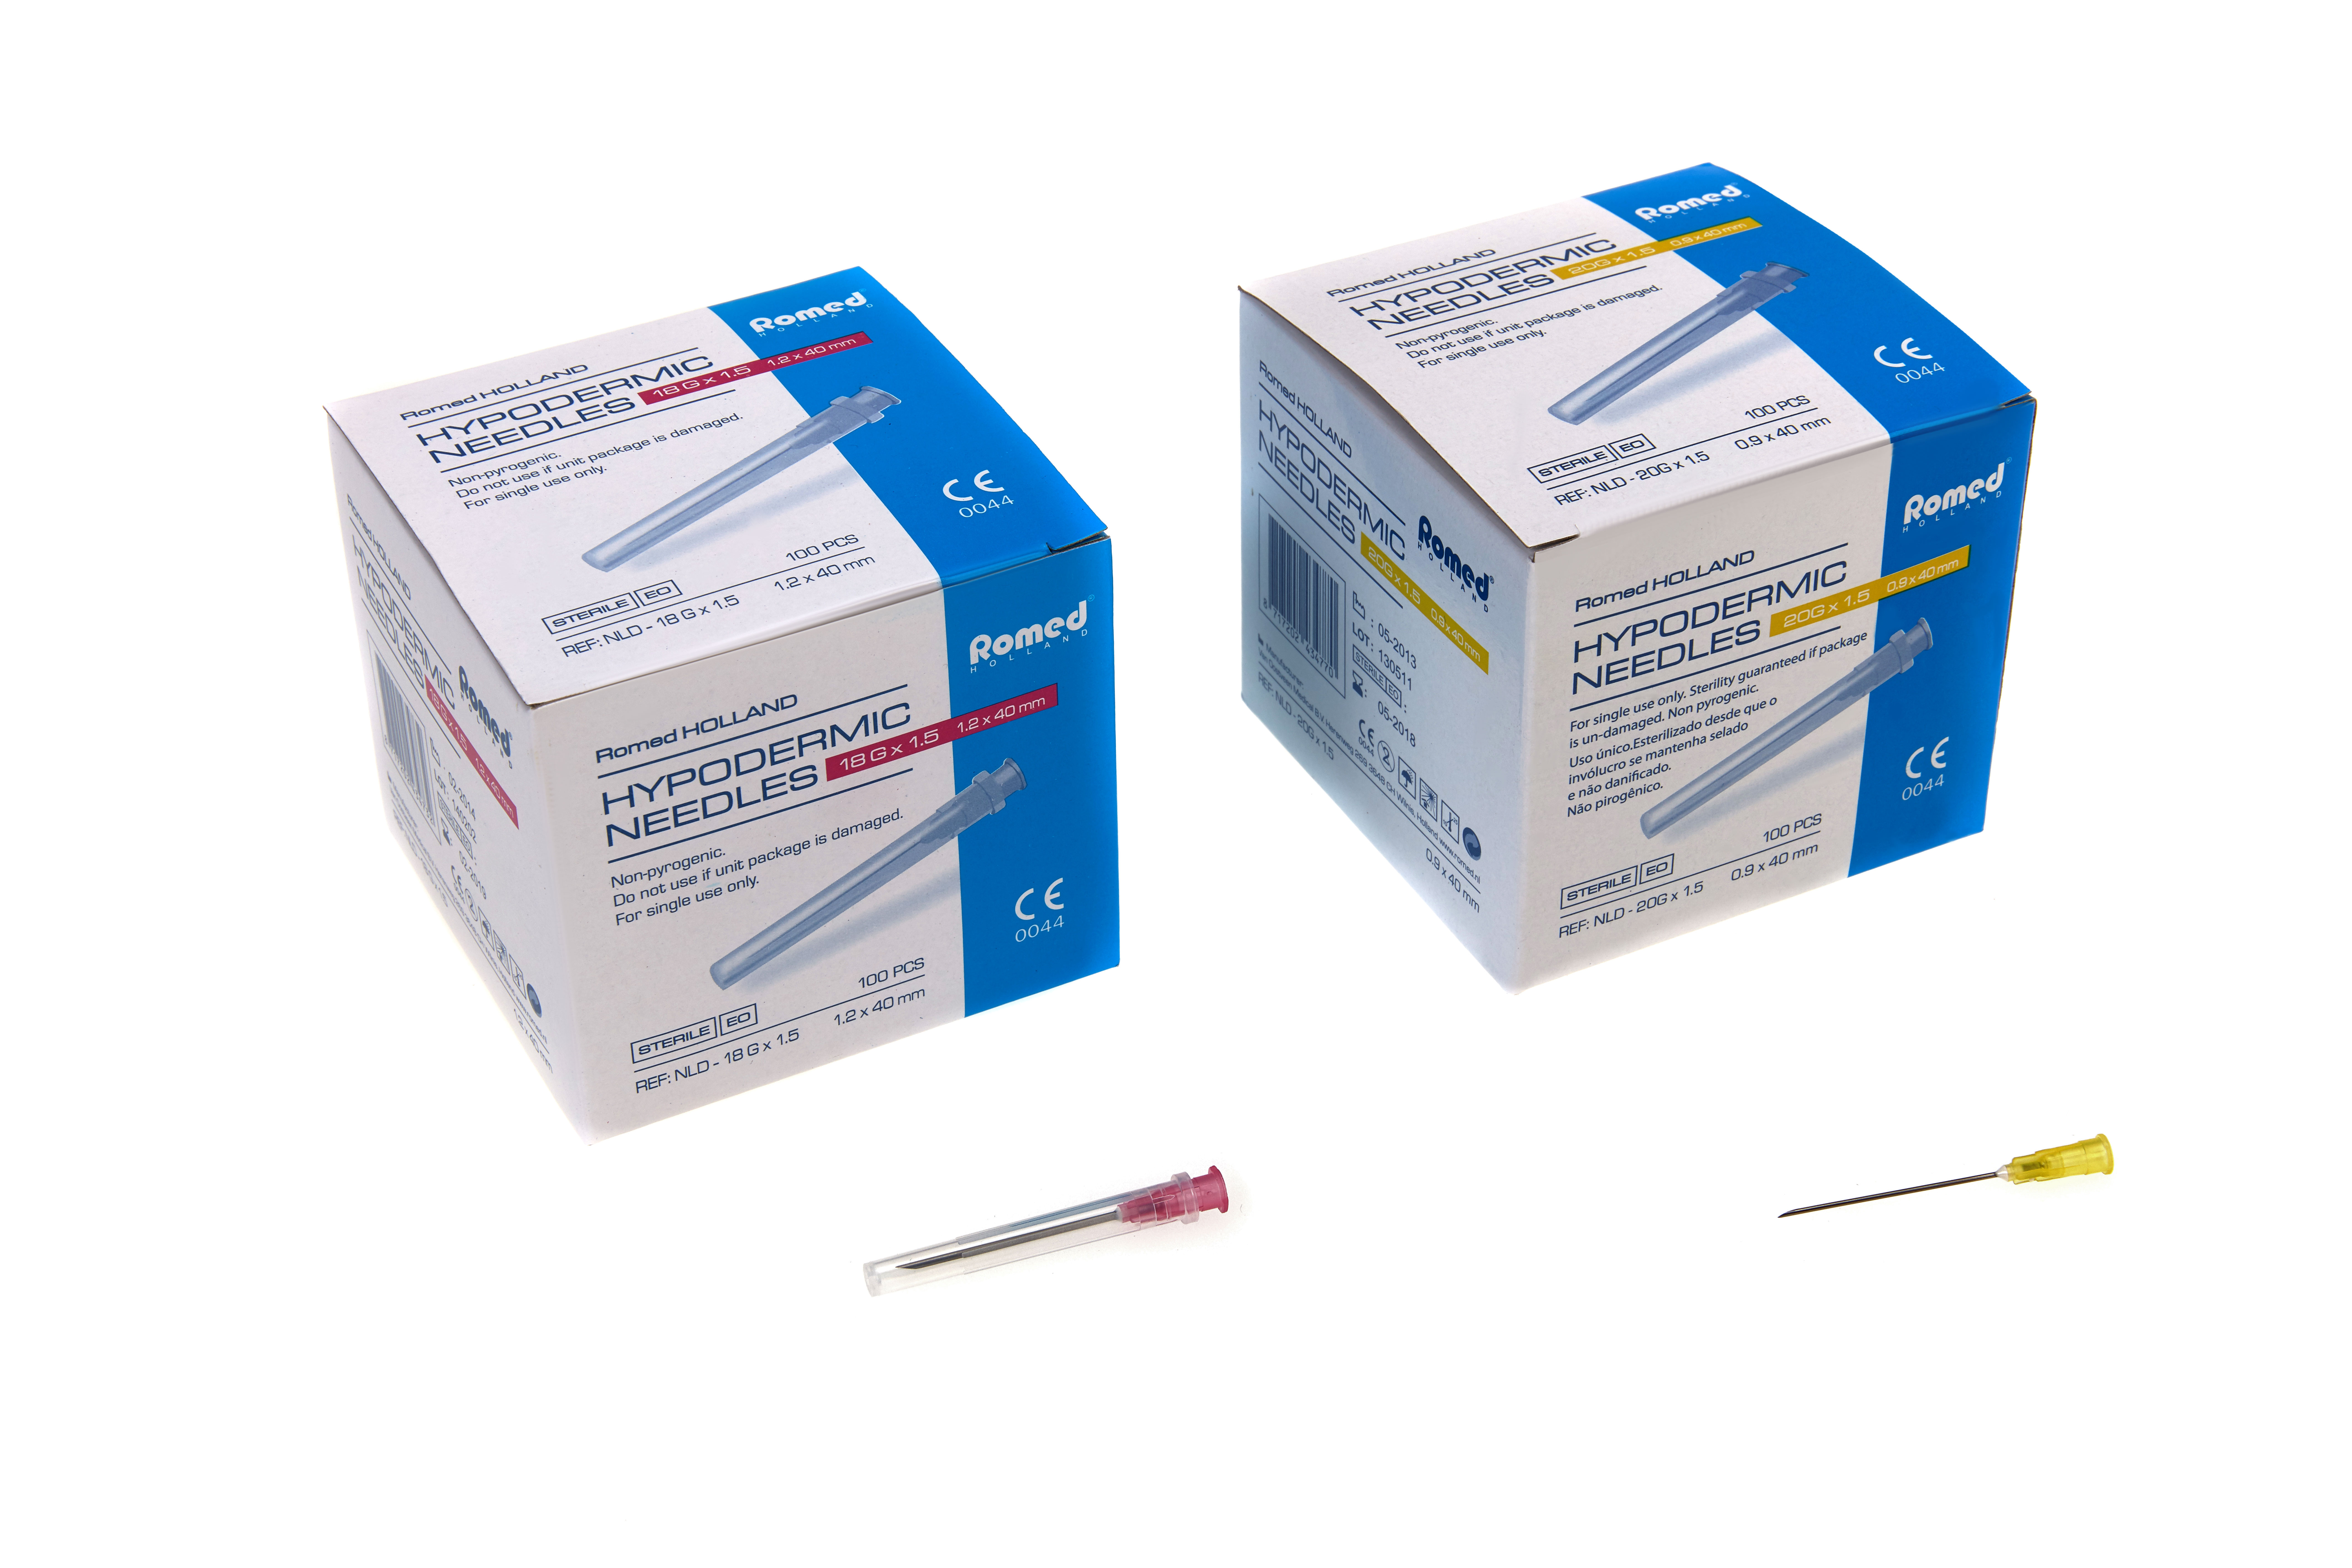 NLD-23GX1 Romed hypodermic needles, 23gx1", sterile per piece, 100 pcs in an inner box, 50 x 100 pcs = 5.000 pcs in a carton.